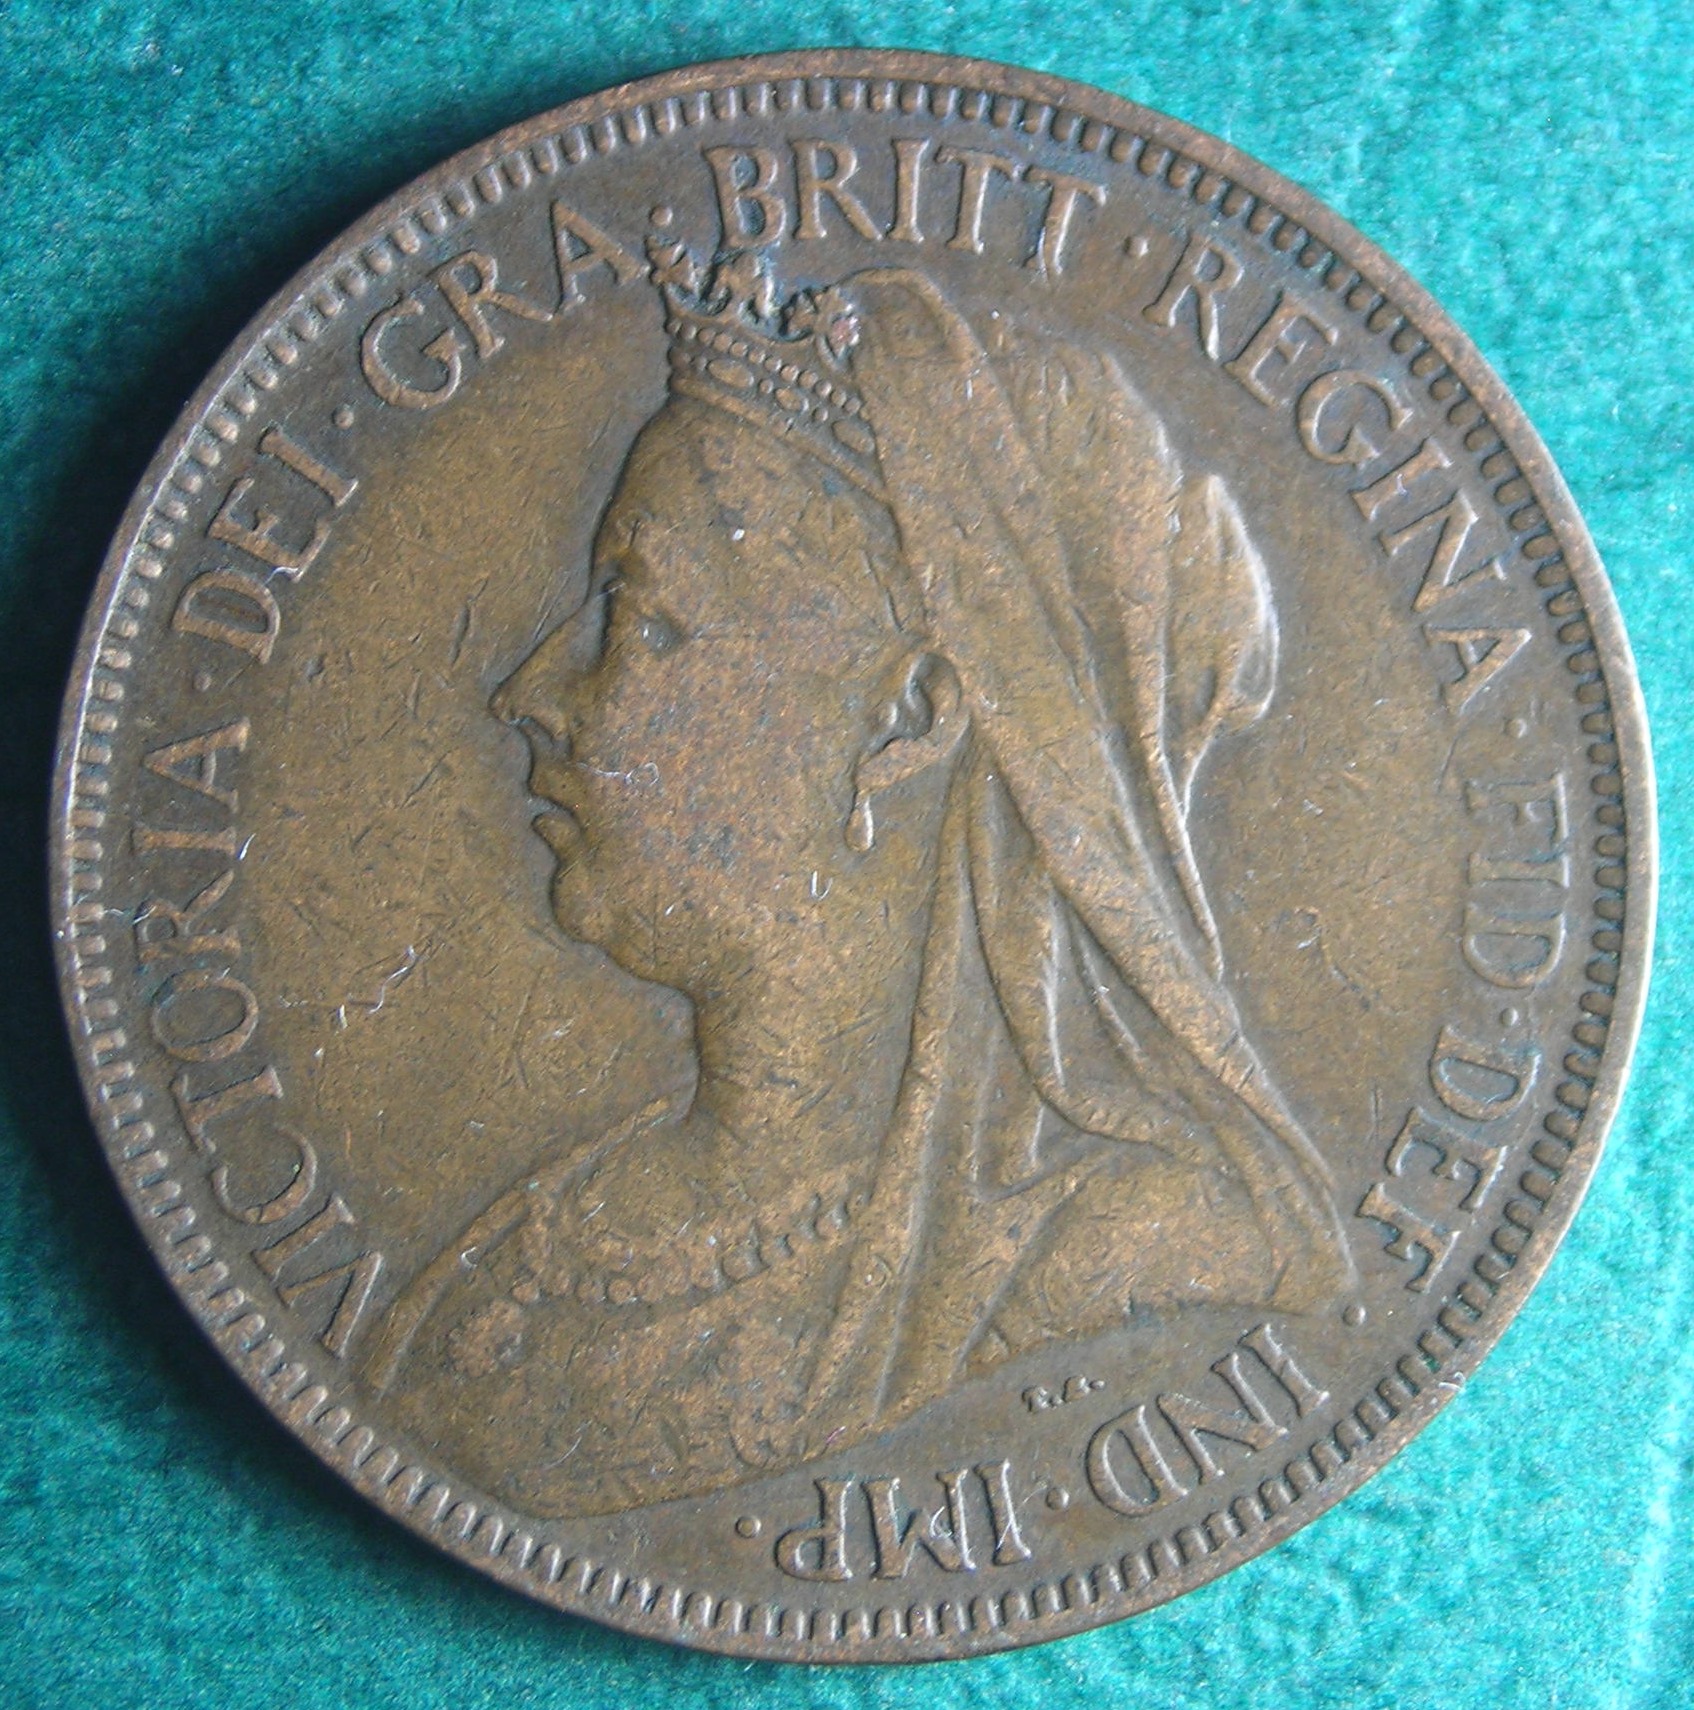 1899 GB 1-2 p obv.JPG